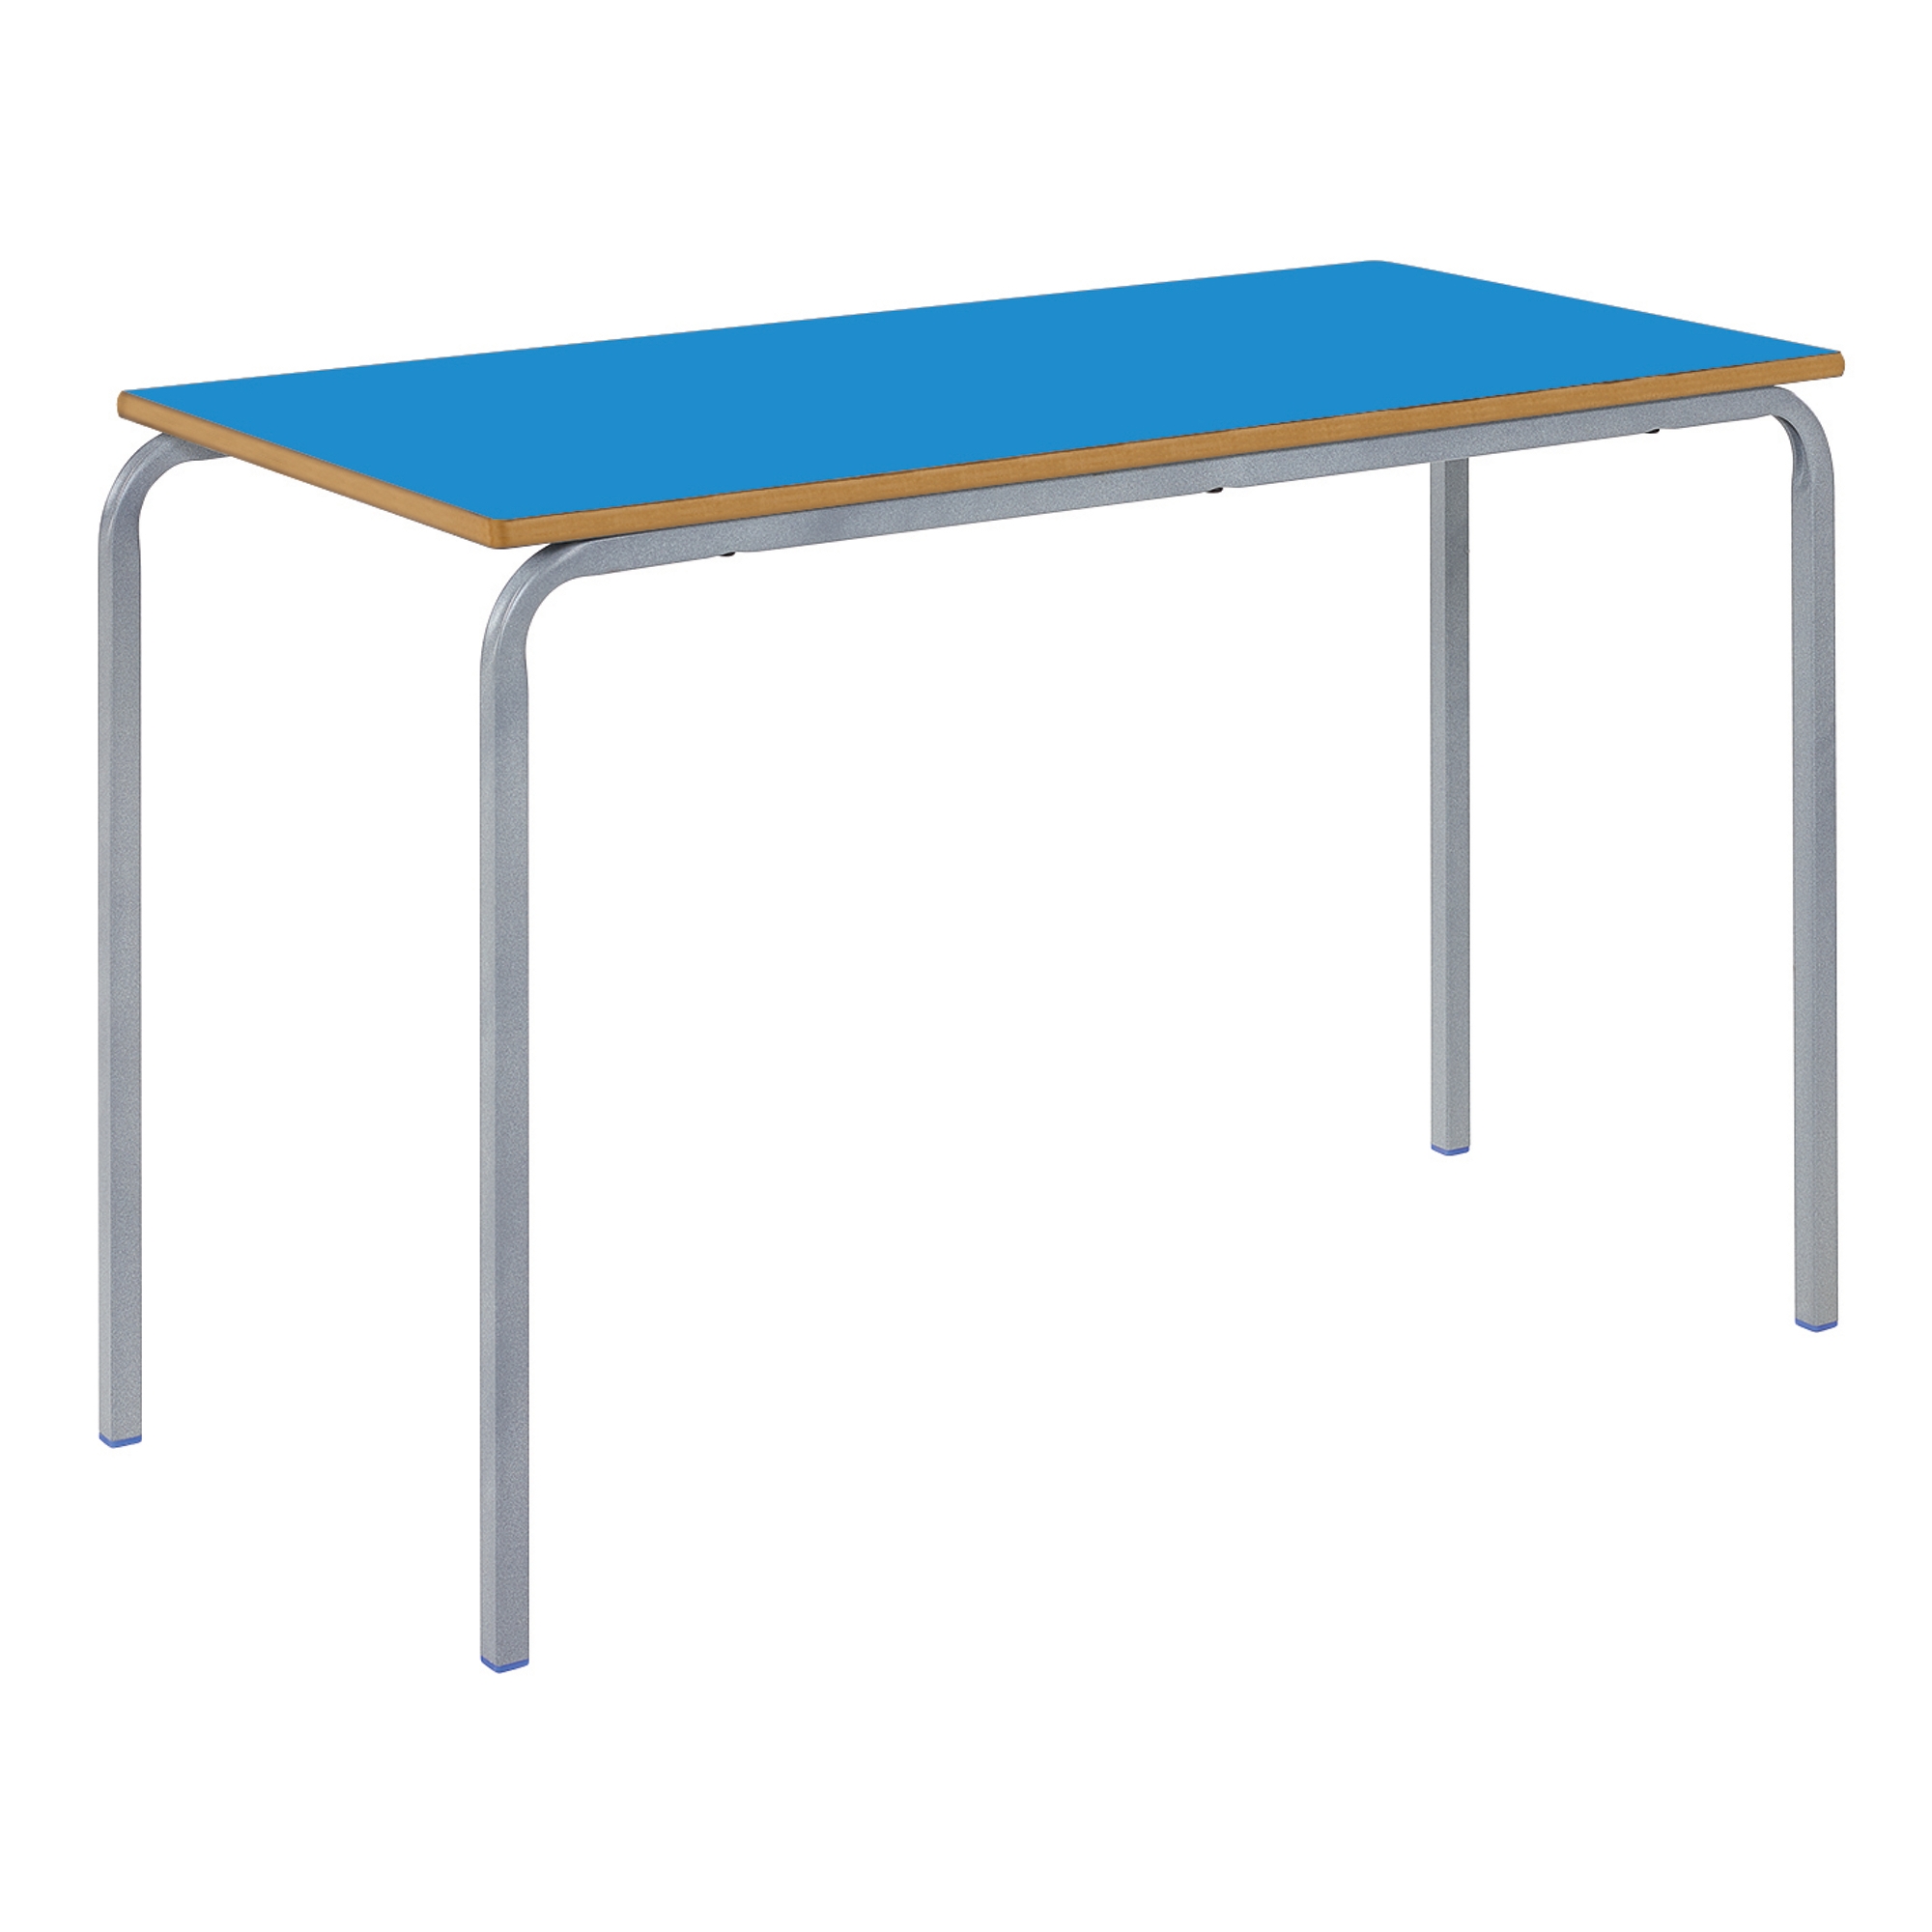 Classmates Rectangular Crushed Bent Classroom Table - 1100 x 550 x 590mm - Blue